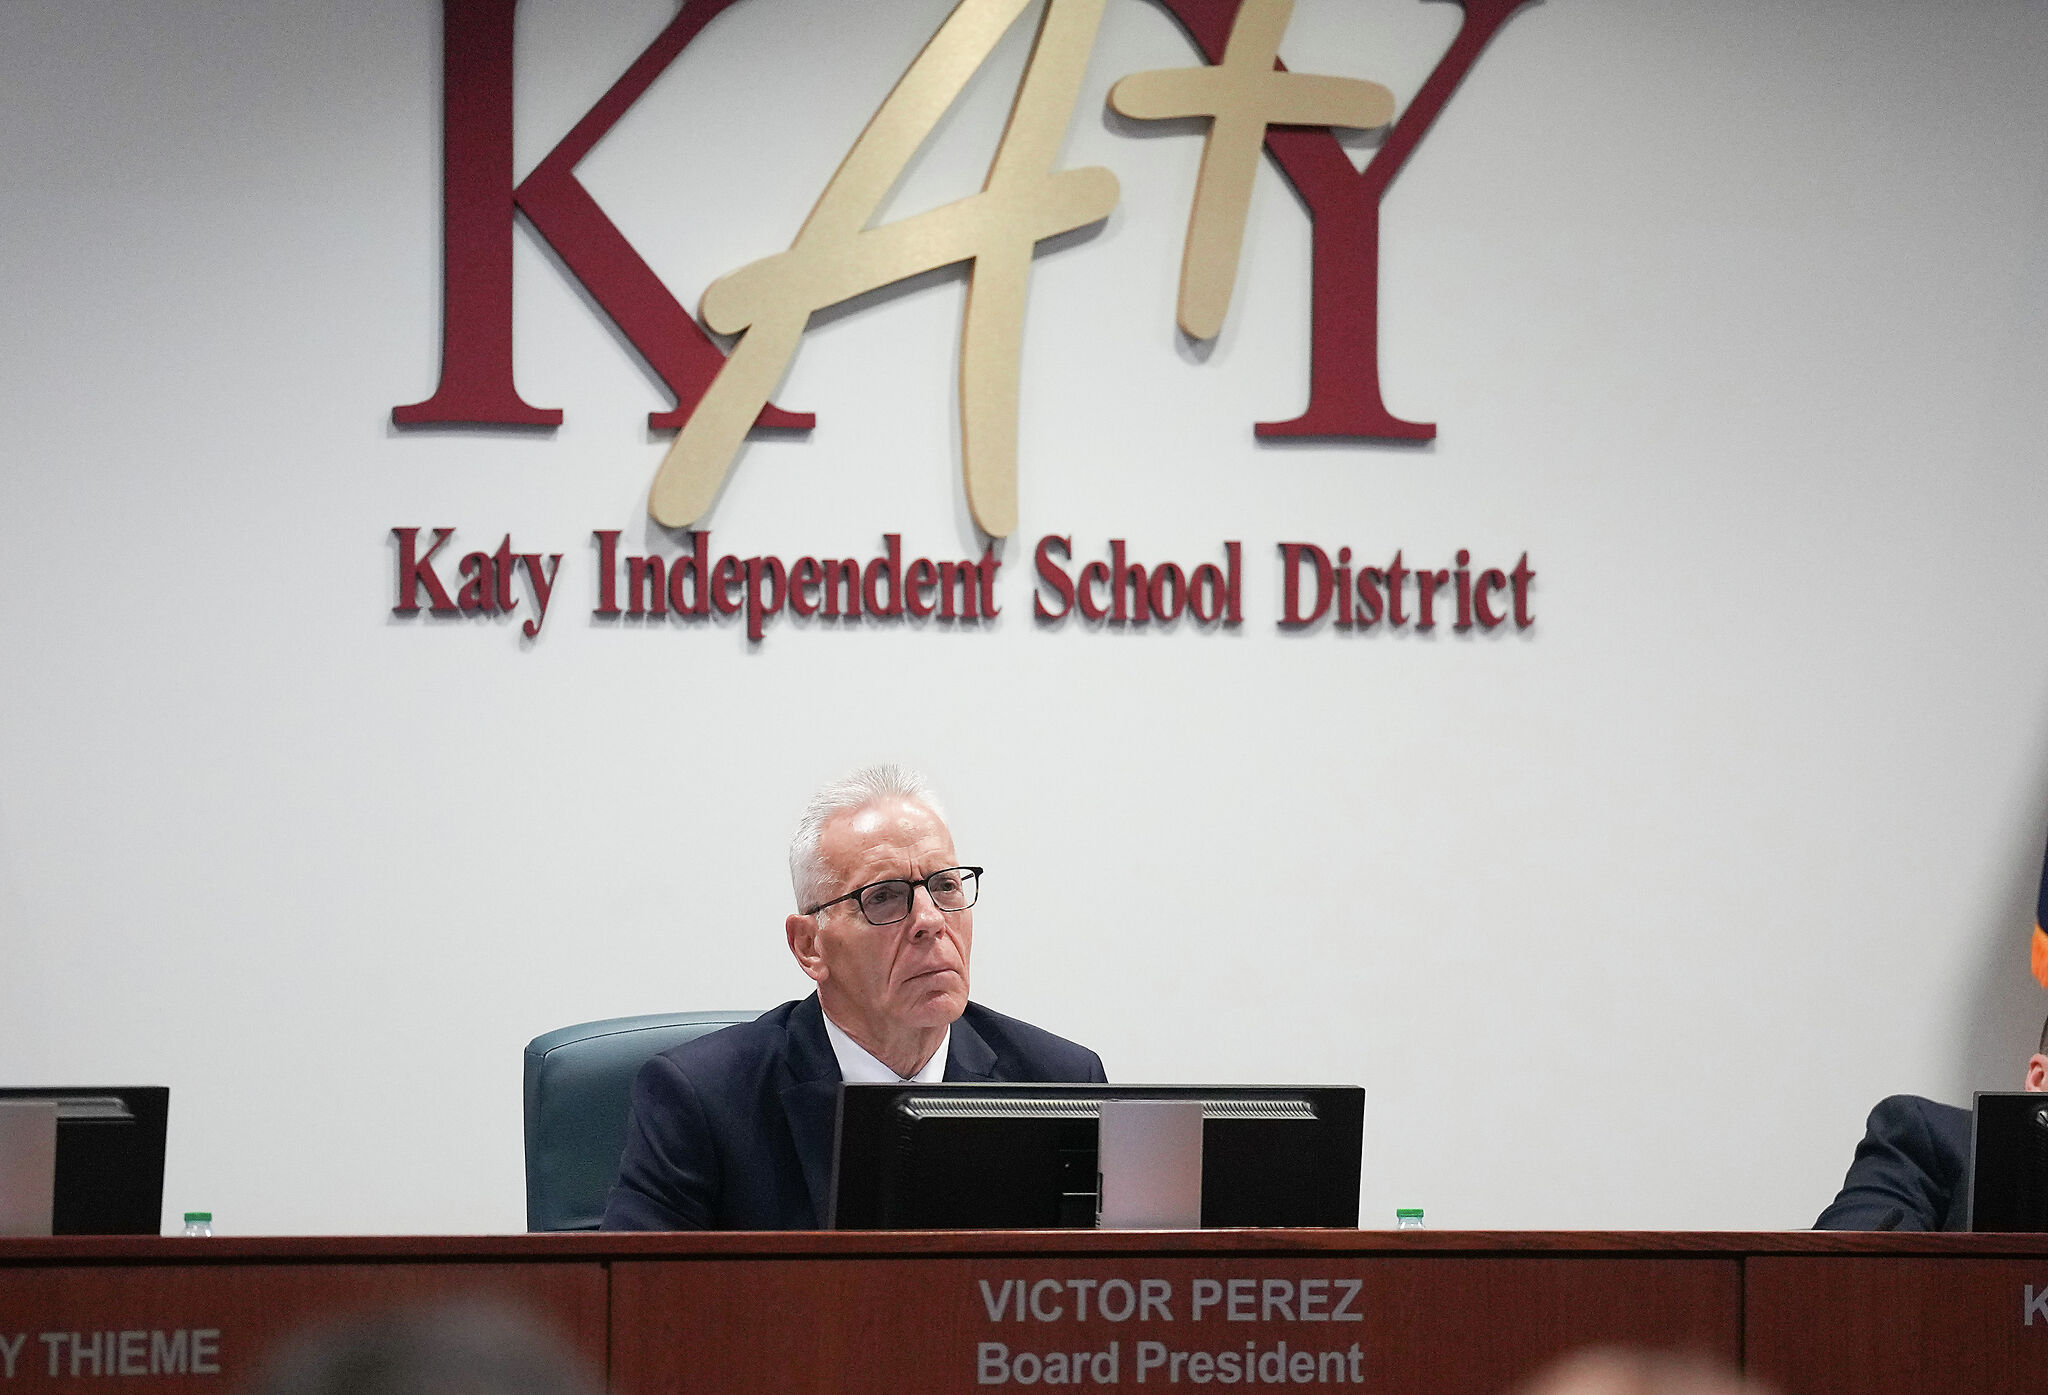 School News page- Katy Texas